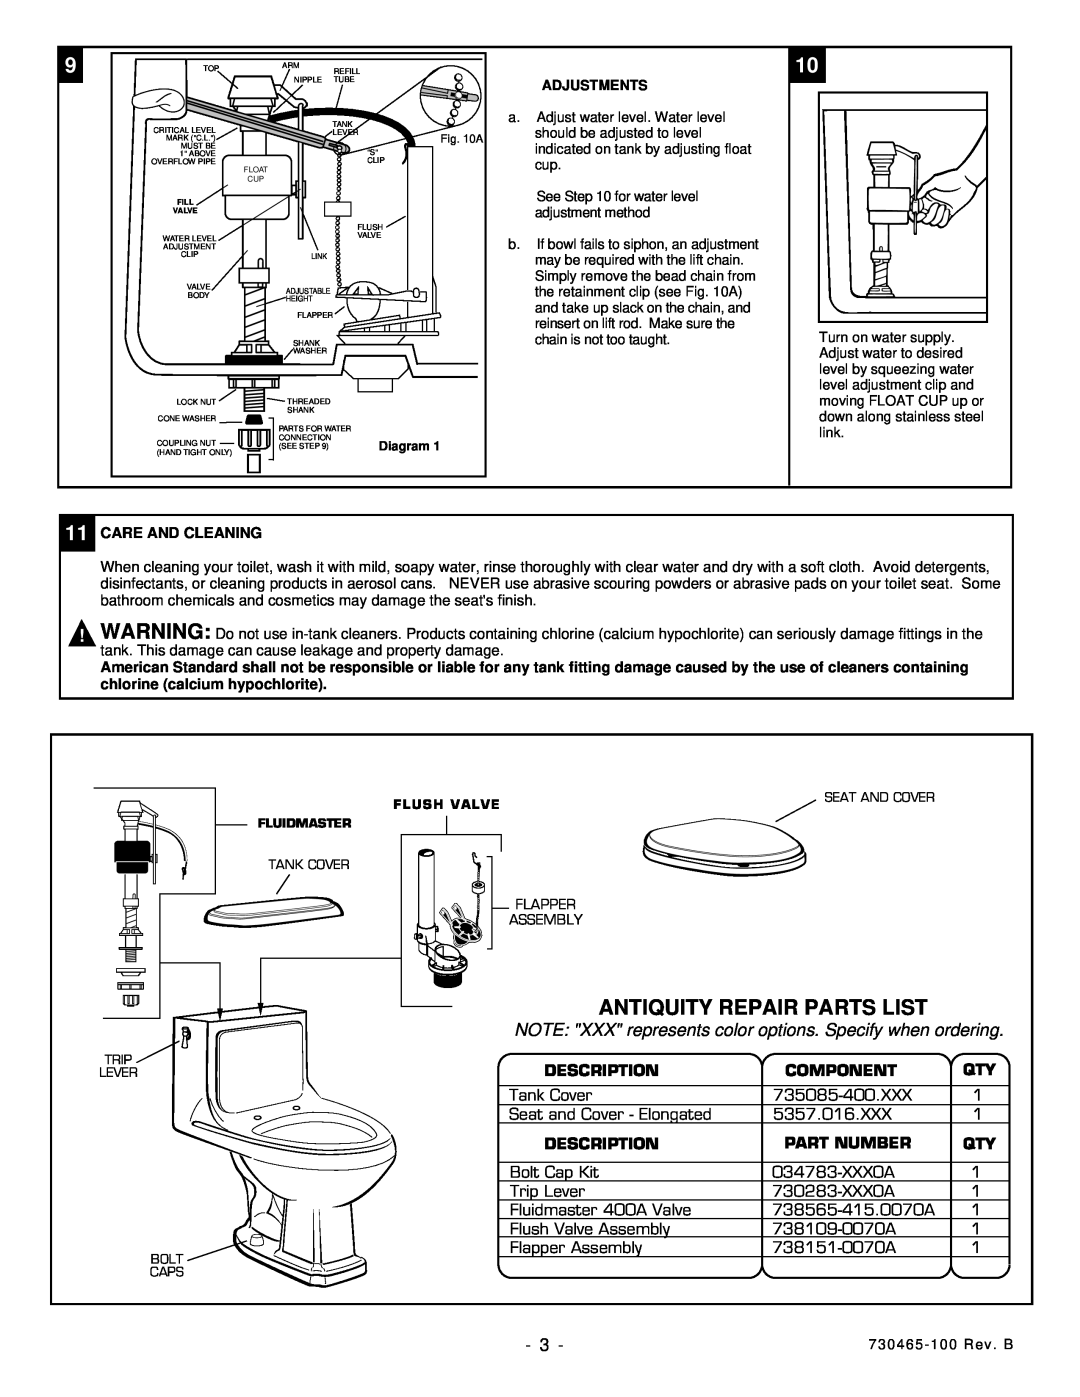 American Standard 2038.016 installation instructions Antiquity Repair Parts List, Description, Component, Part Number 